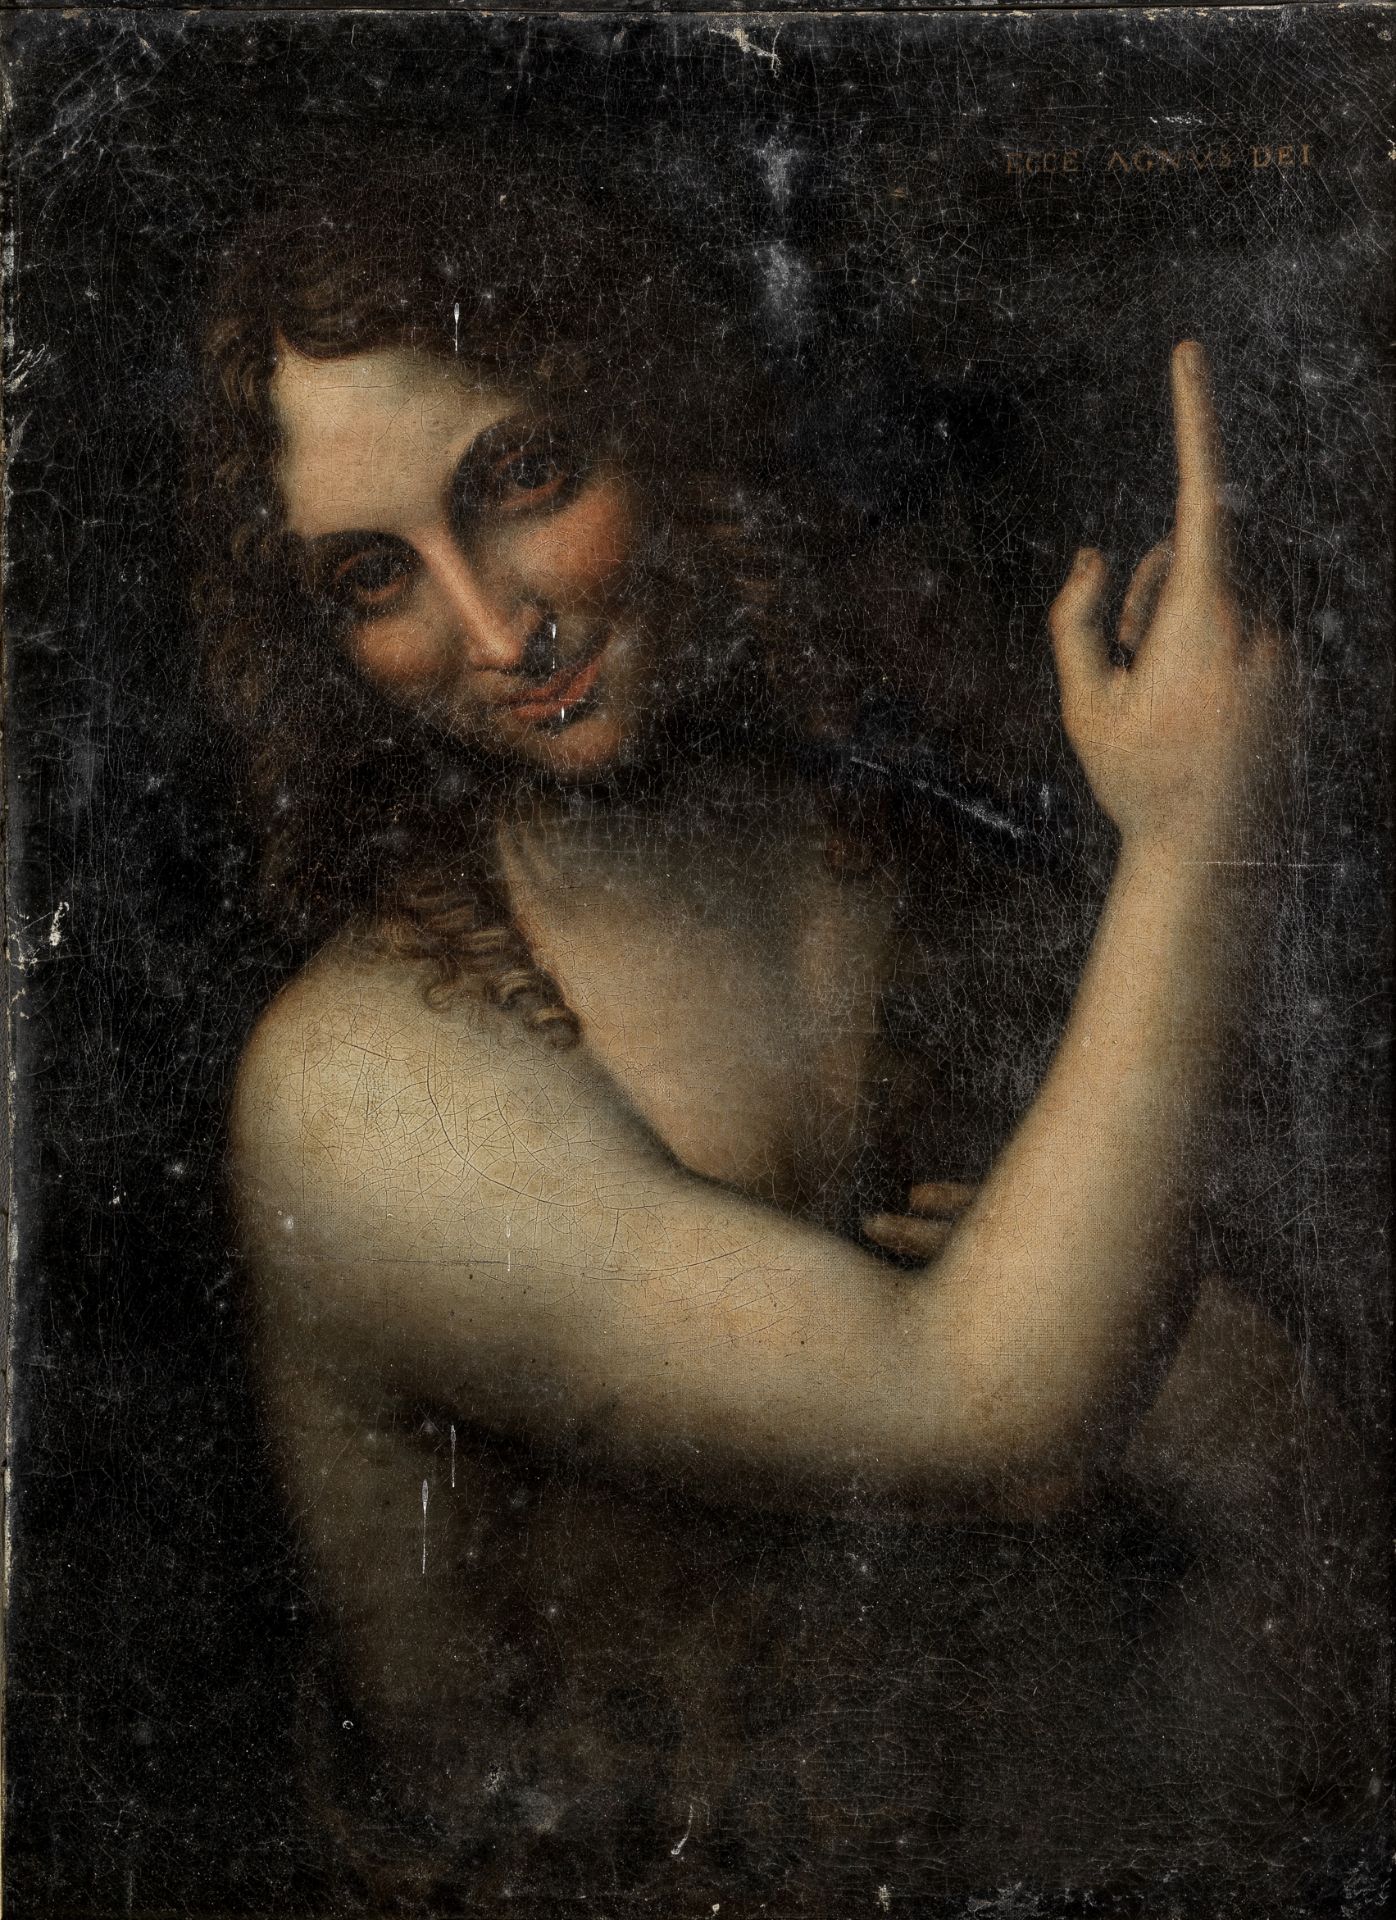 After Leonardo da Vinci, 18th Century Saint John the Baptist